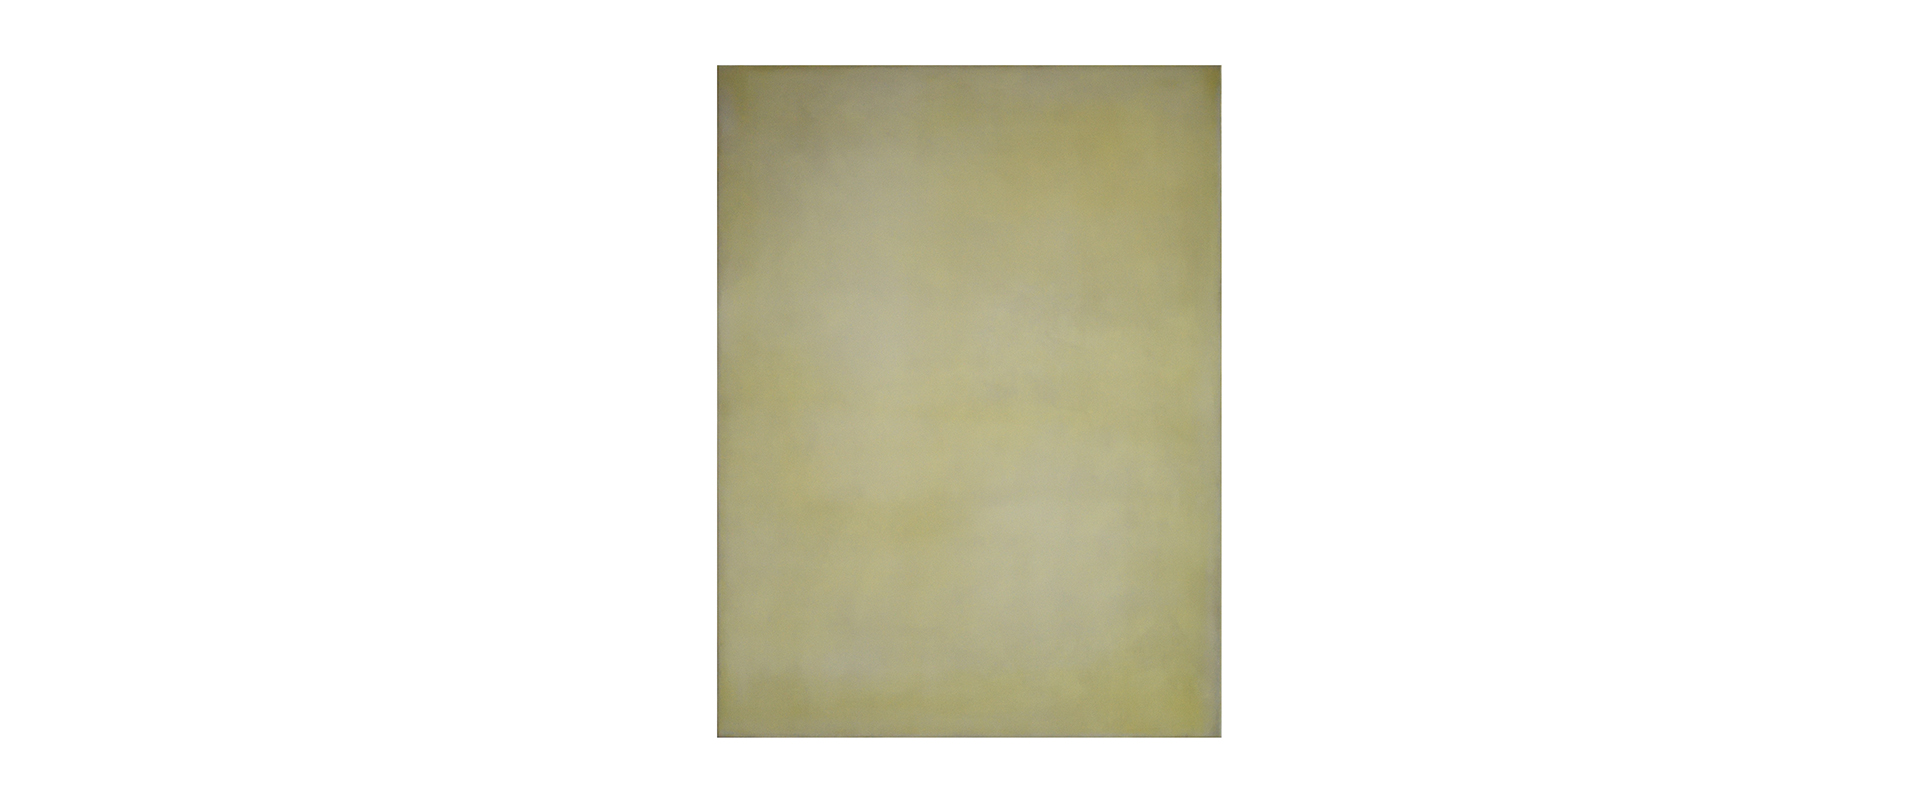 Jus Juchtmans, 20211015 – 2021, Acryl auf Leinwand, 120 x 90 cm